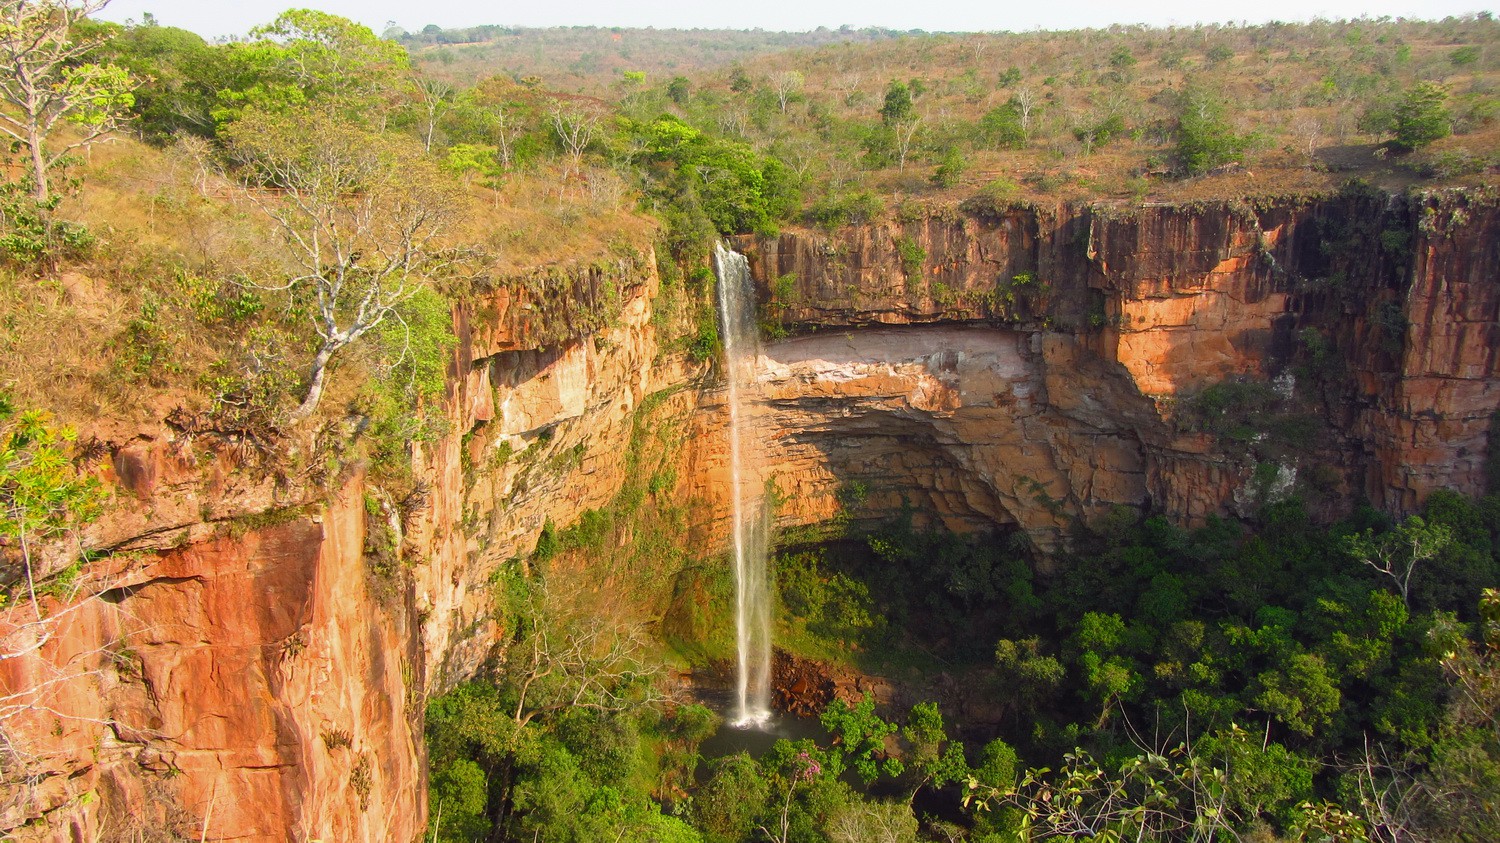 Waterfall Veu de Noiva, 86 meters free-falling